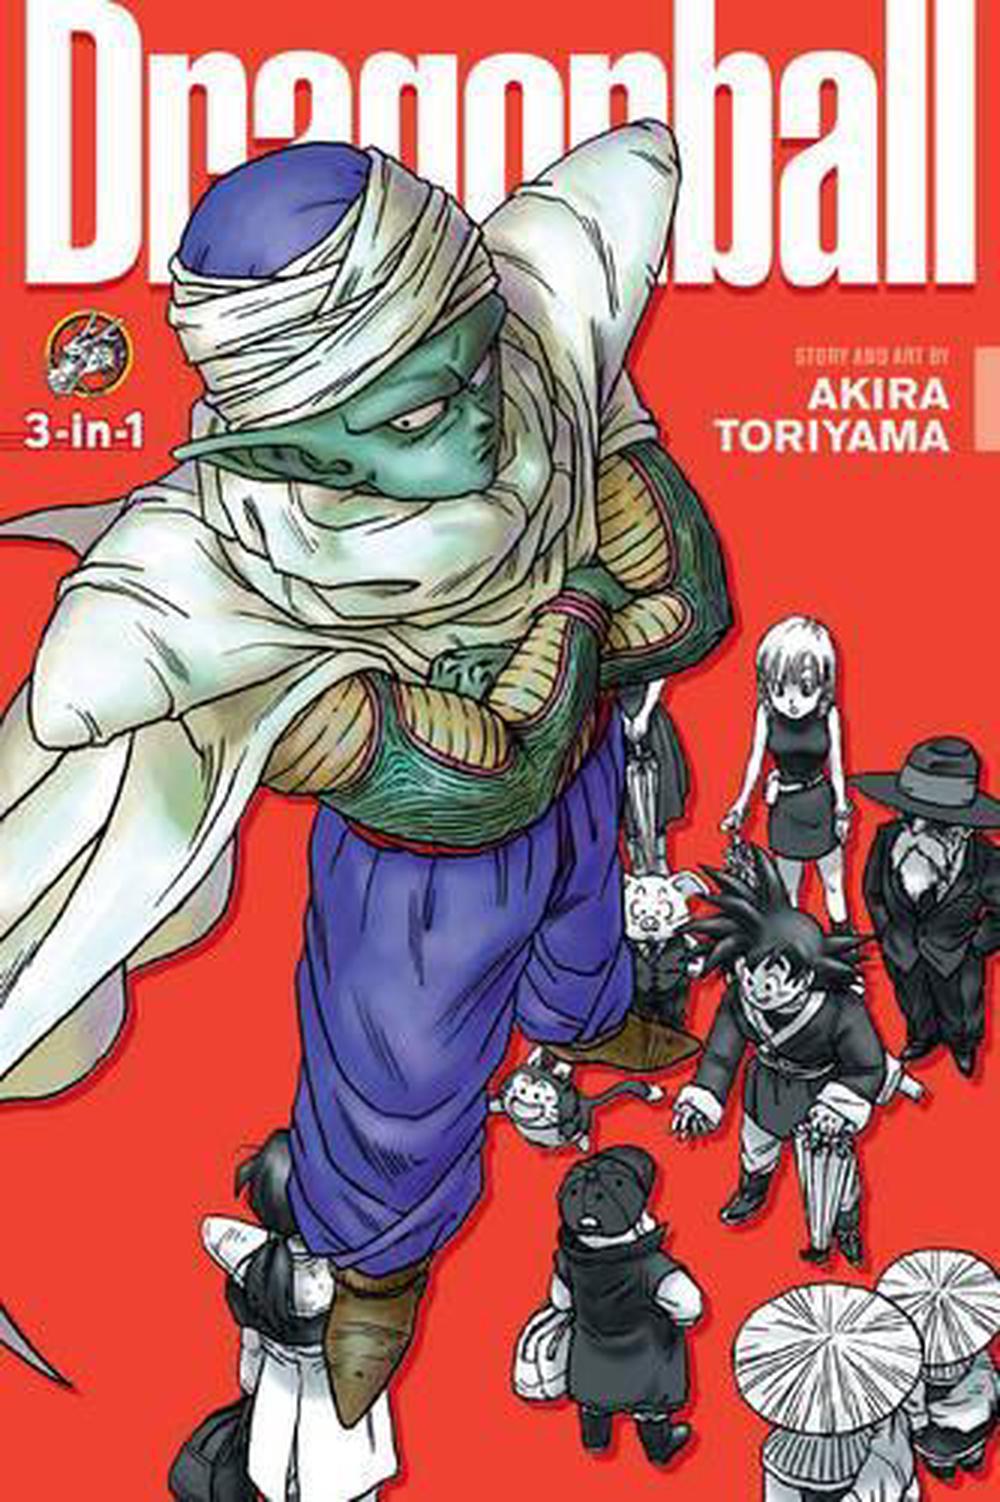 Dragon Ball (3-In-1 Edition), Vol. 5: Includes Vols. 13, 14 & 15 by Akira Toriya 9781421564708 ...